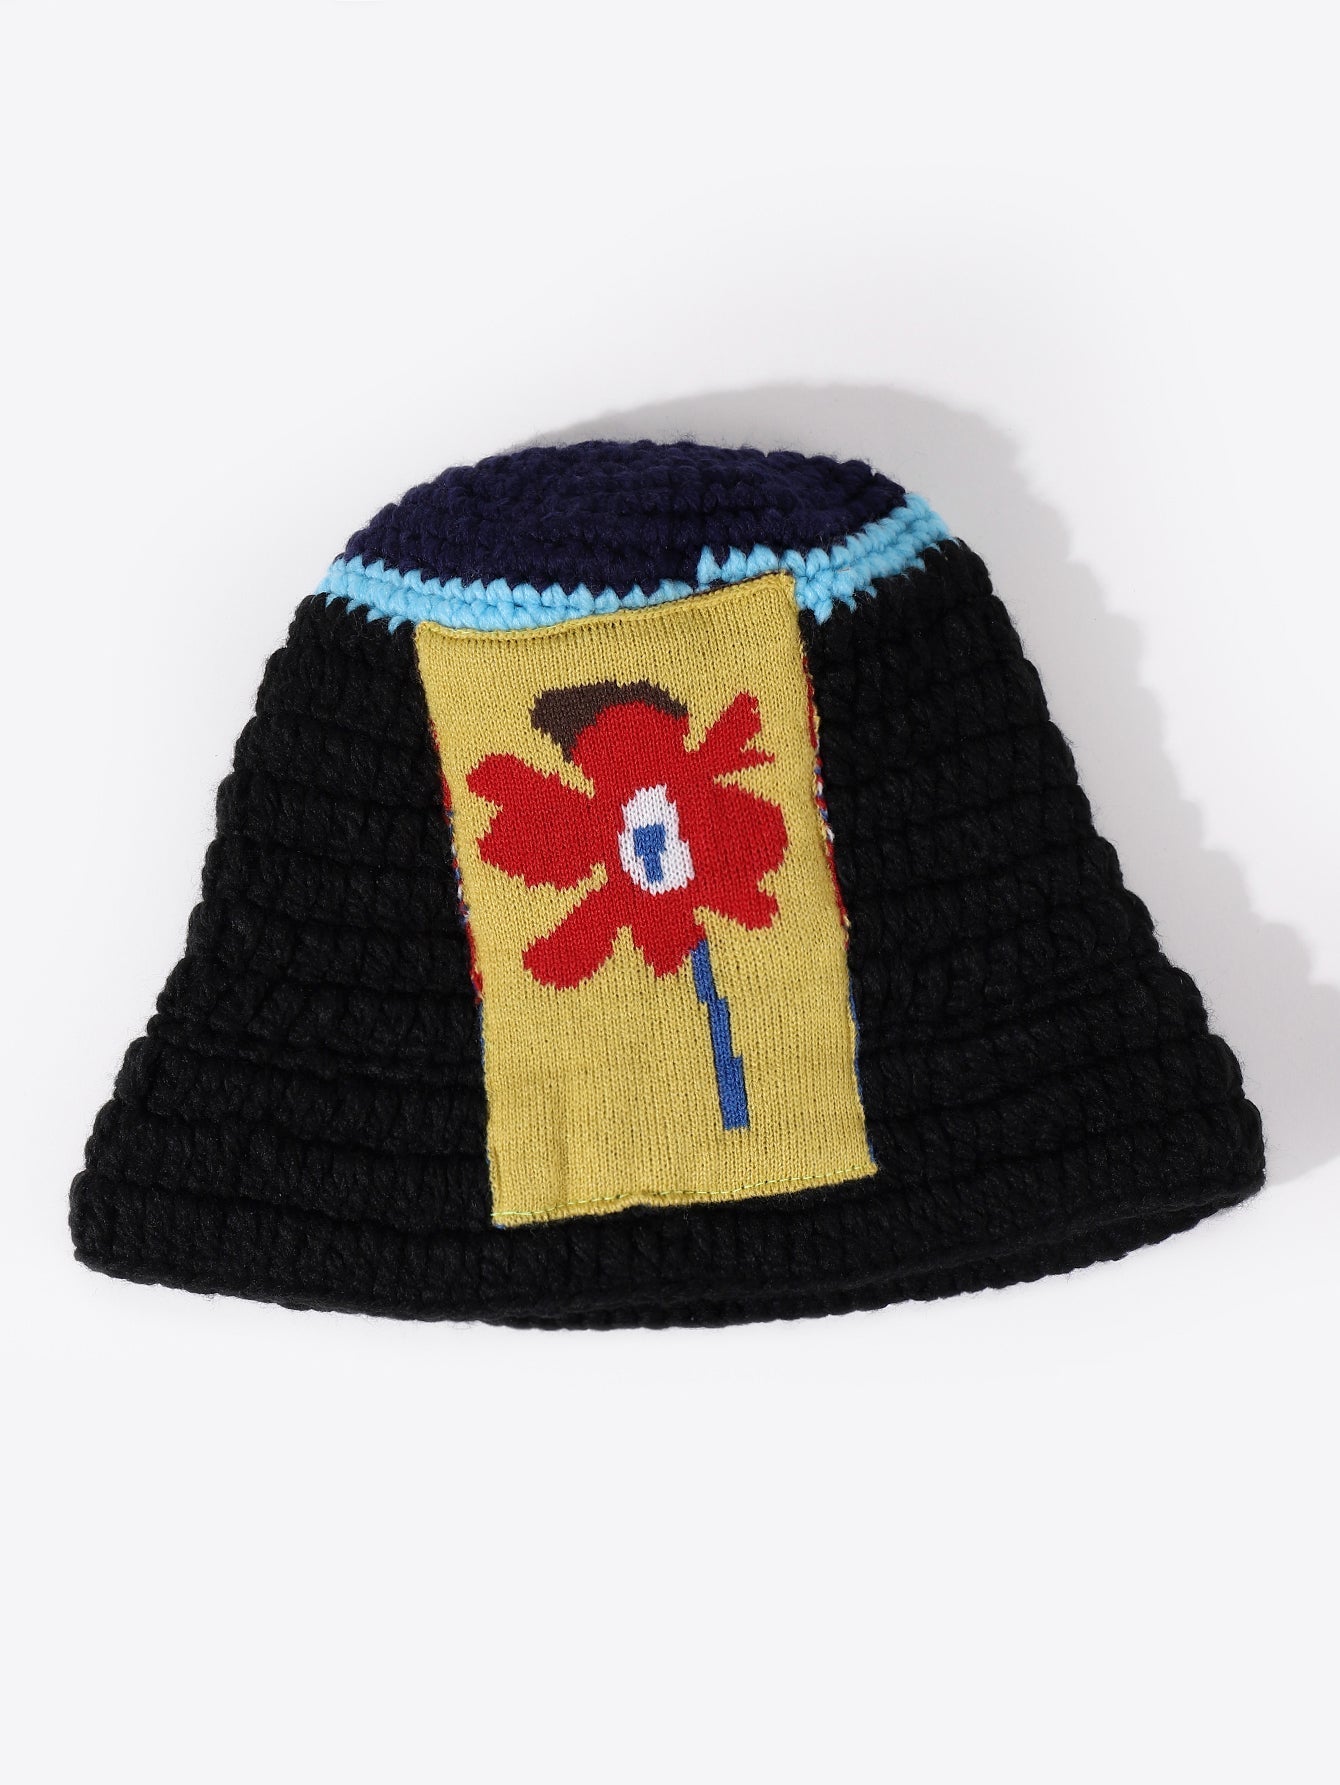 Knit Hat for Women Knitting Crochet Handmade Warmer Cap Sai Feel